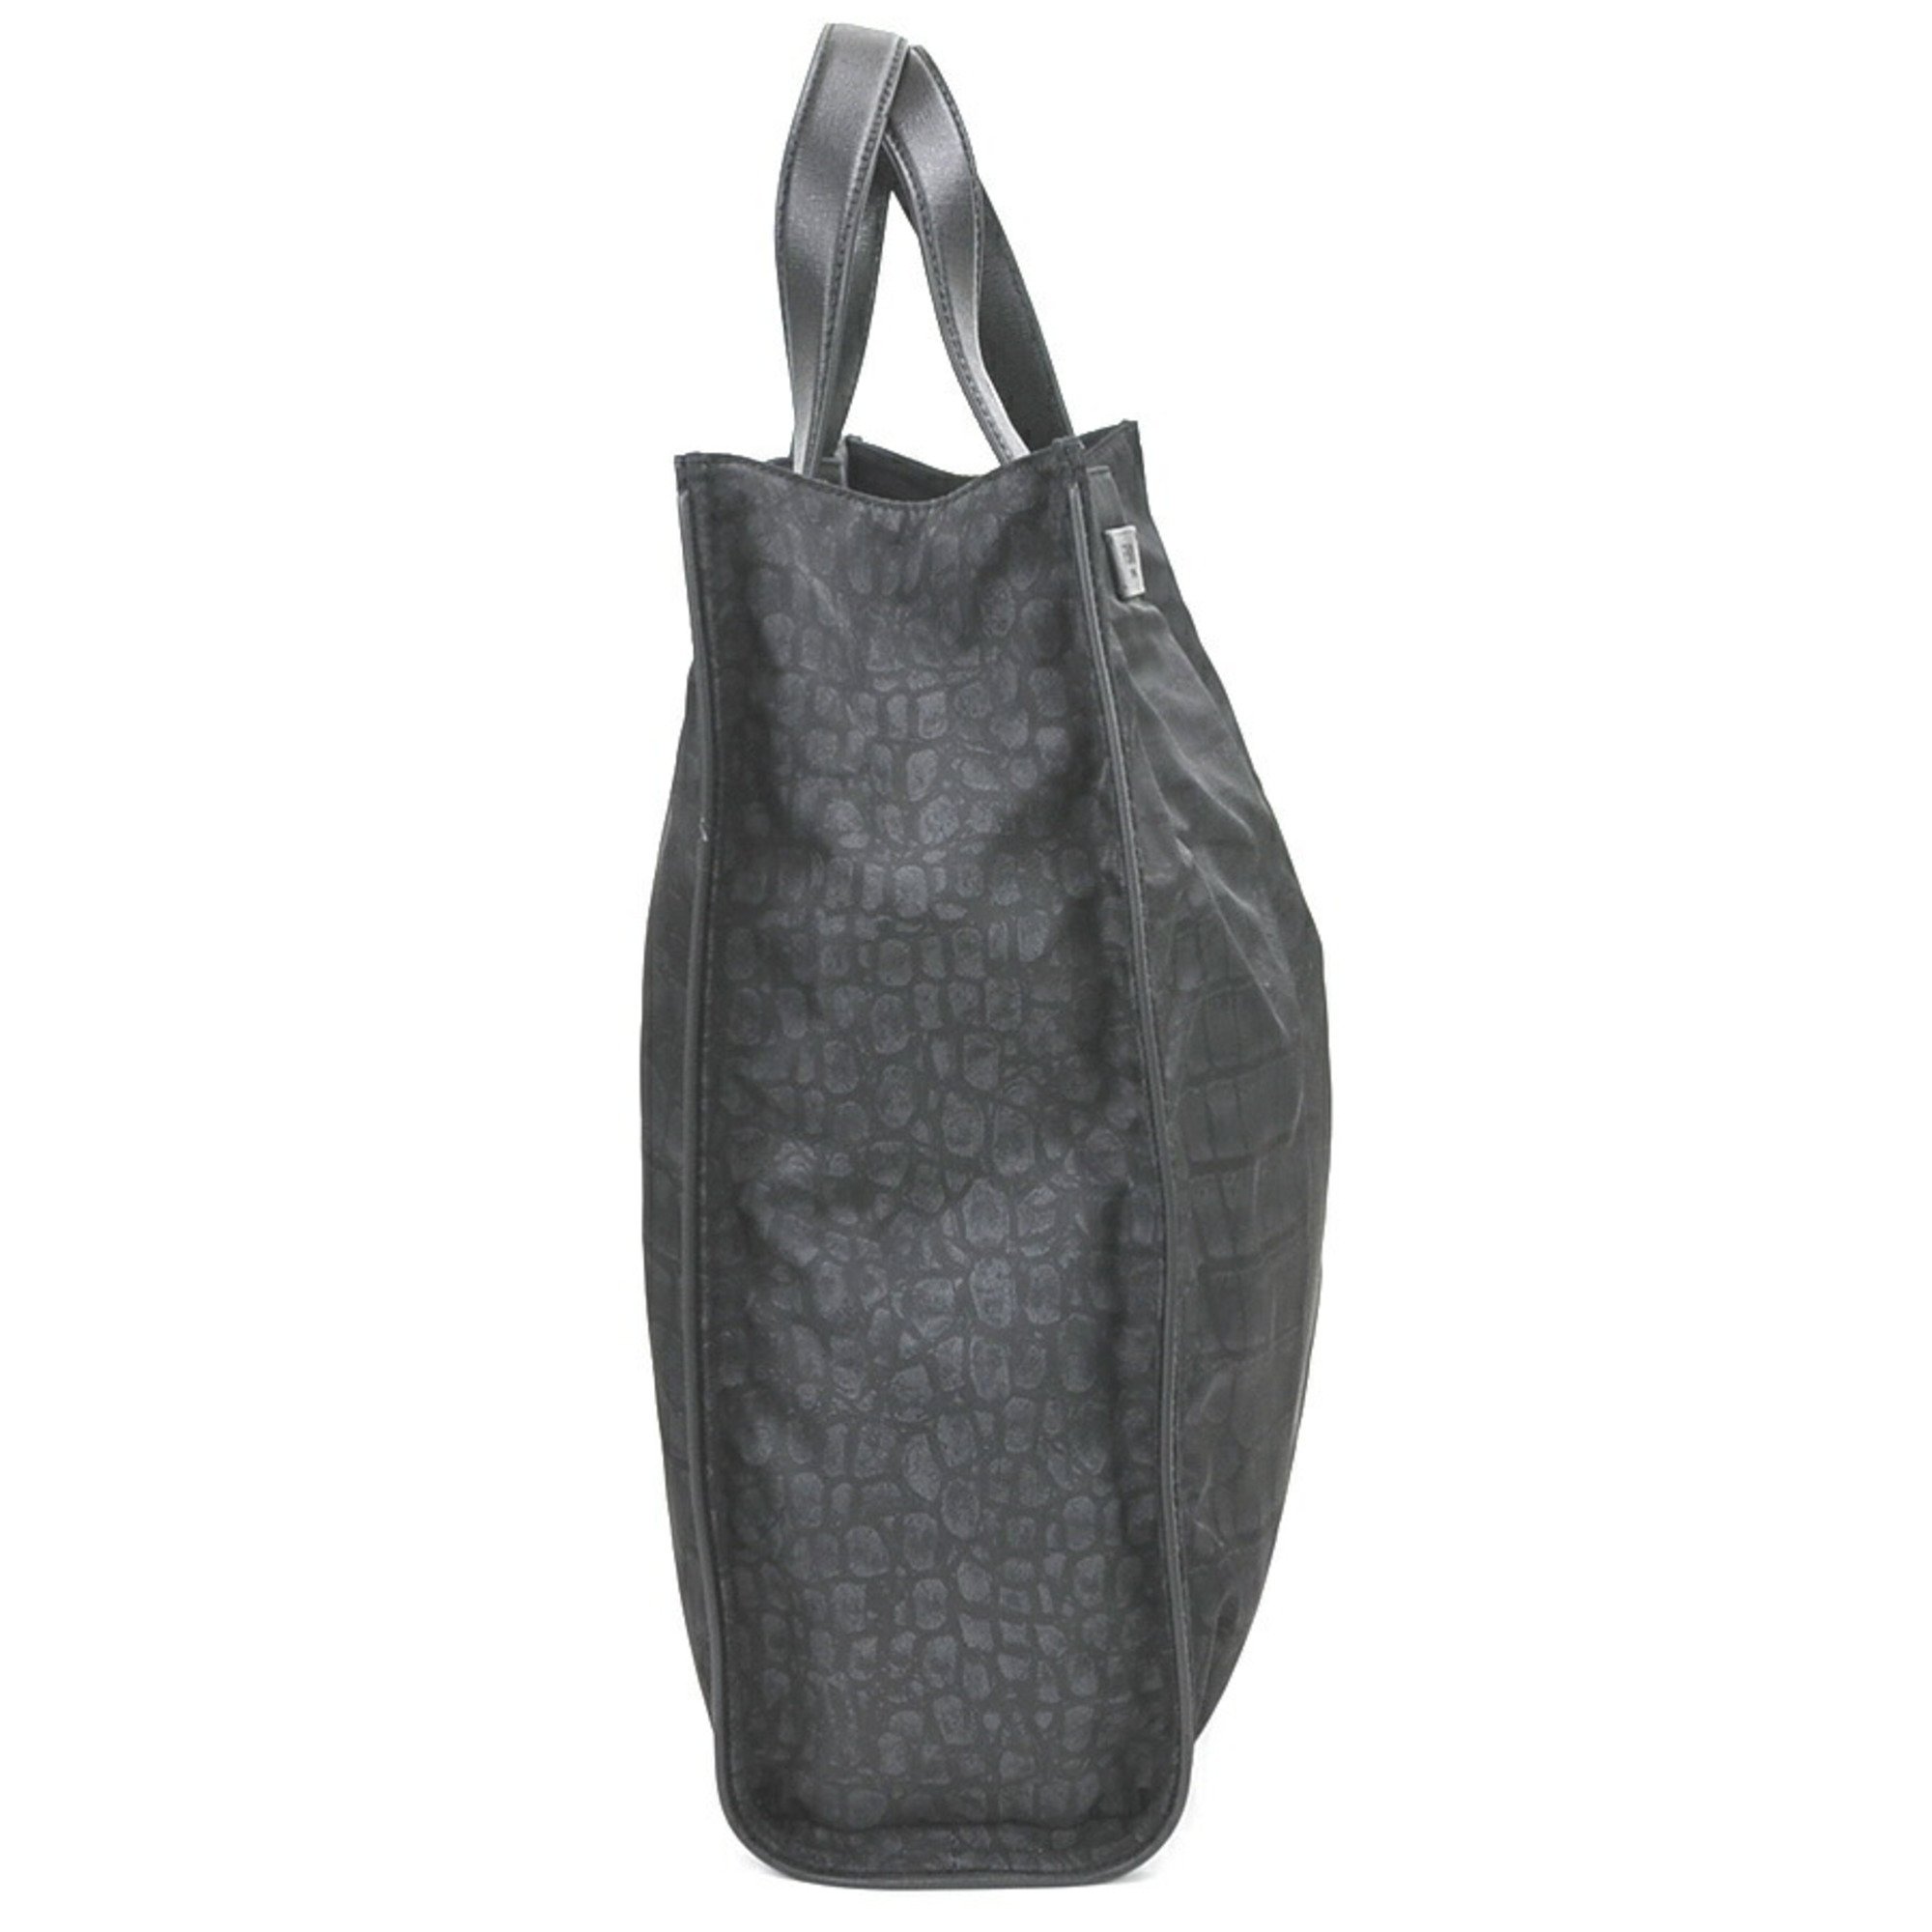 Fendi FENDI handbag tote bag nylon / leather black ladies